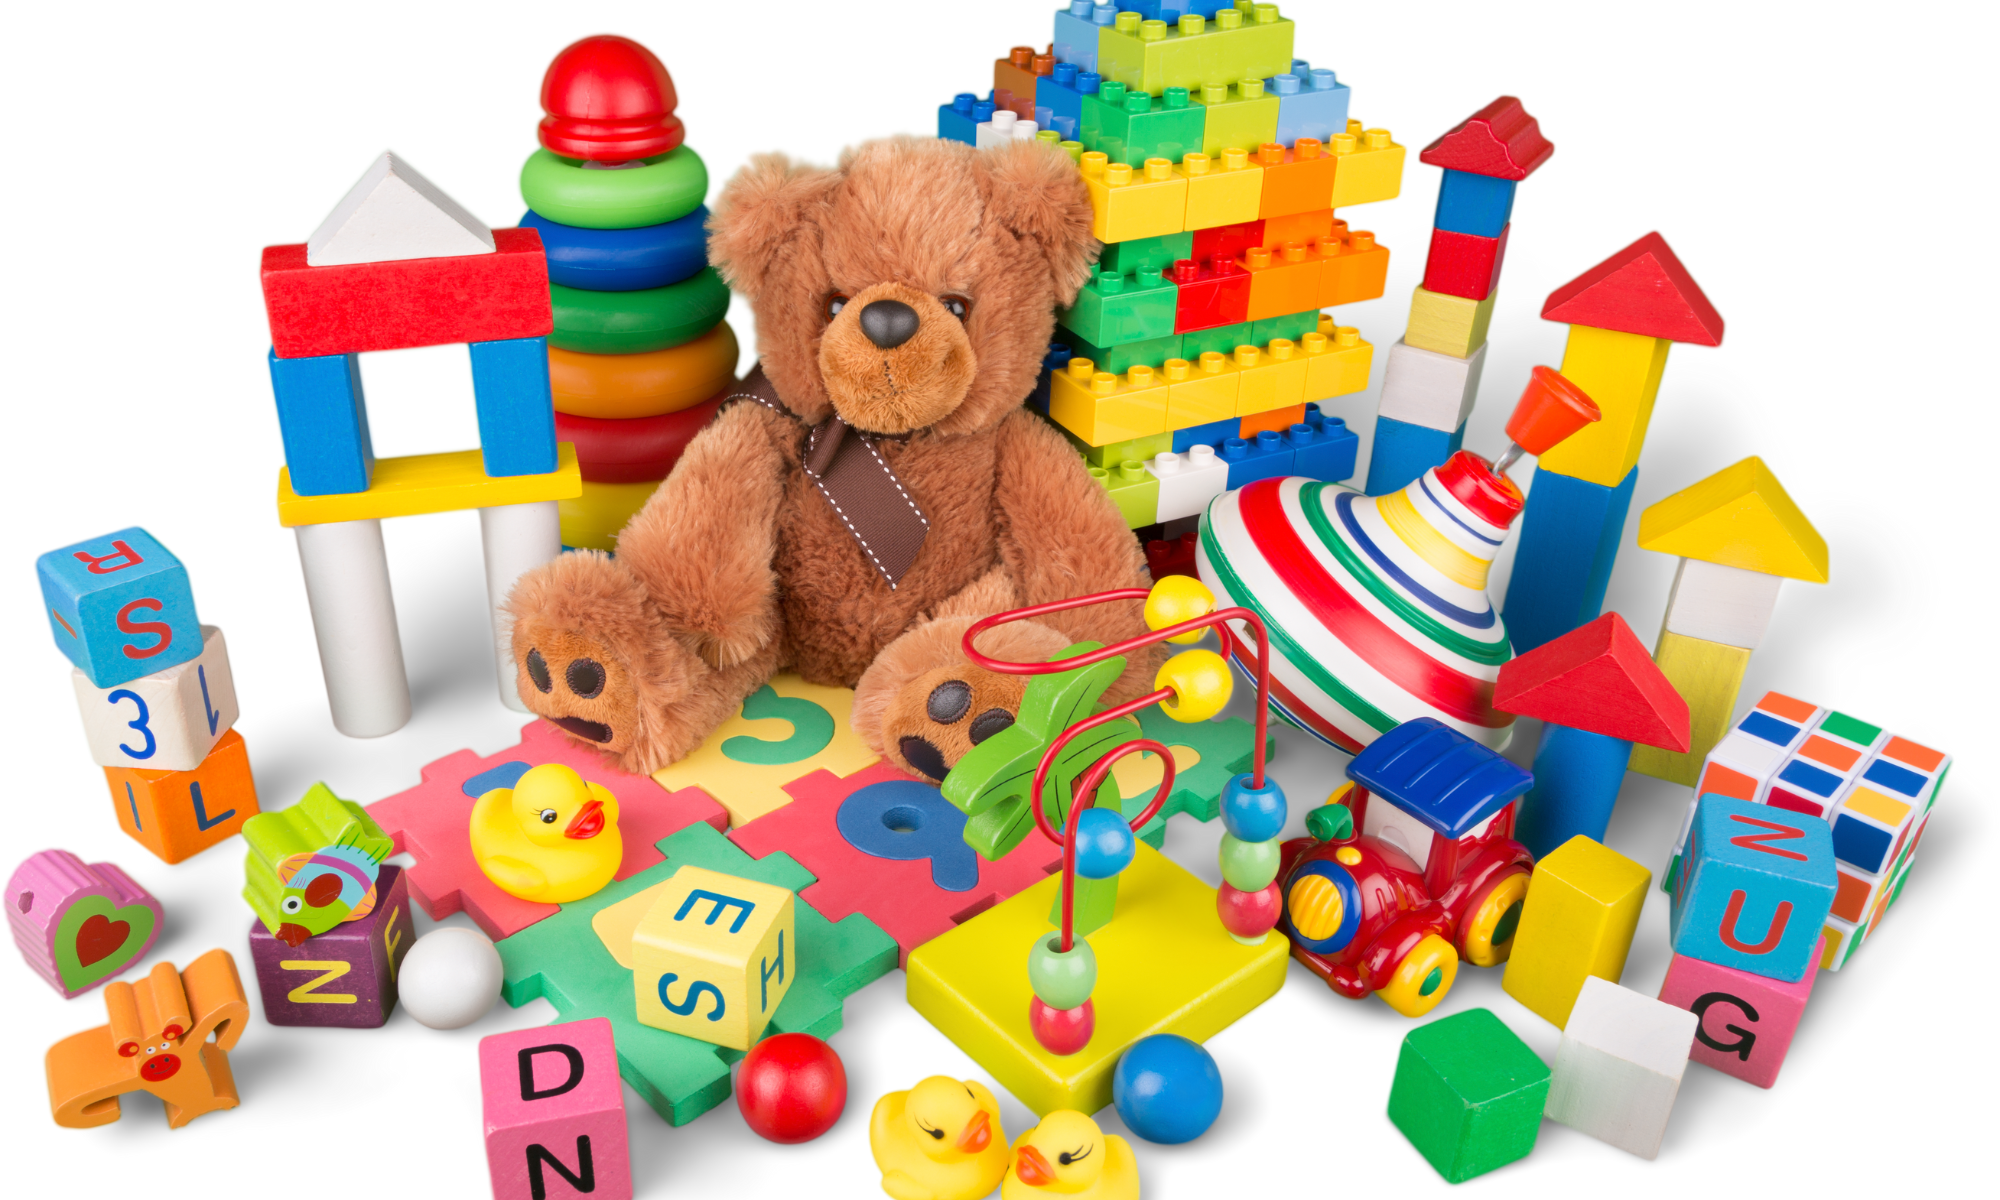 Segurança de Brinquedos – Norma EN71/3